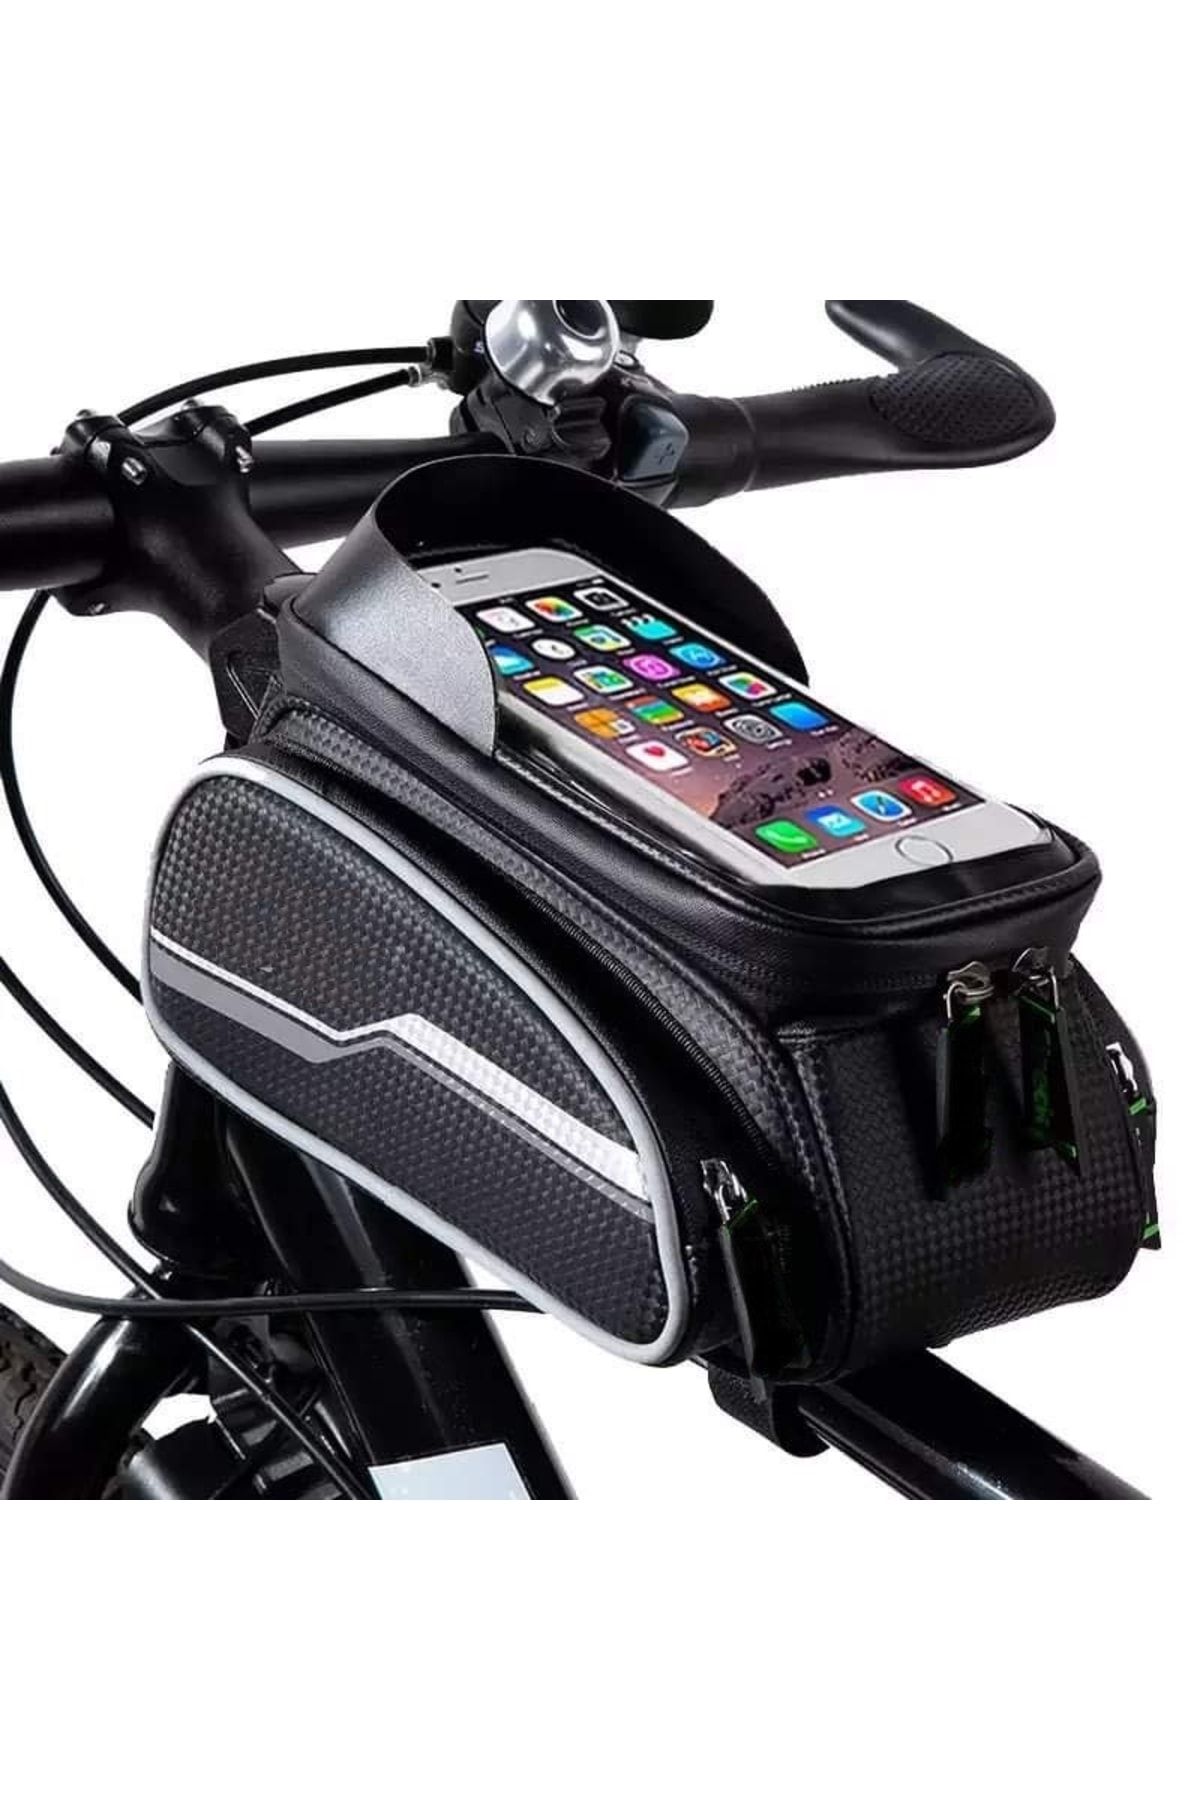 ROBESBON 6 Inç Su Geçirmez Dokunmatik Ekran Bisiklet Kadro Üstü Çanta